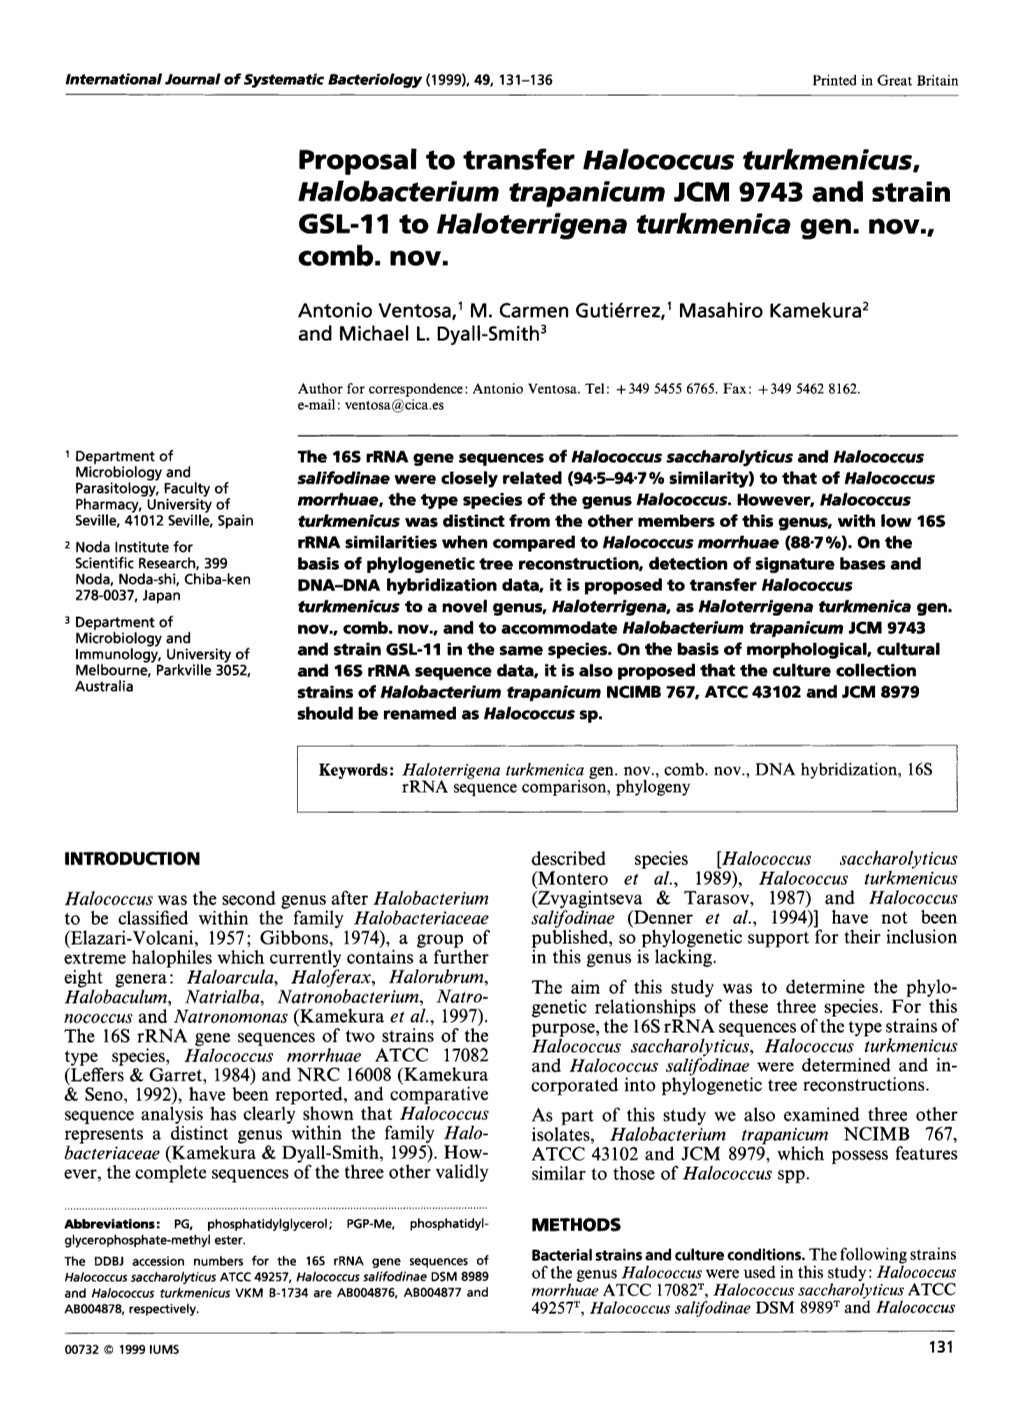 Proposal to Transfer Halococcus Turkmenicus, Halobacterium Trapanicum JCM 9743 and Strain GSL-11 to Haloterrigena Turkmenica Gen